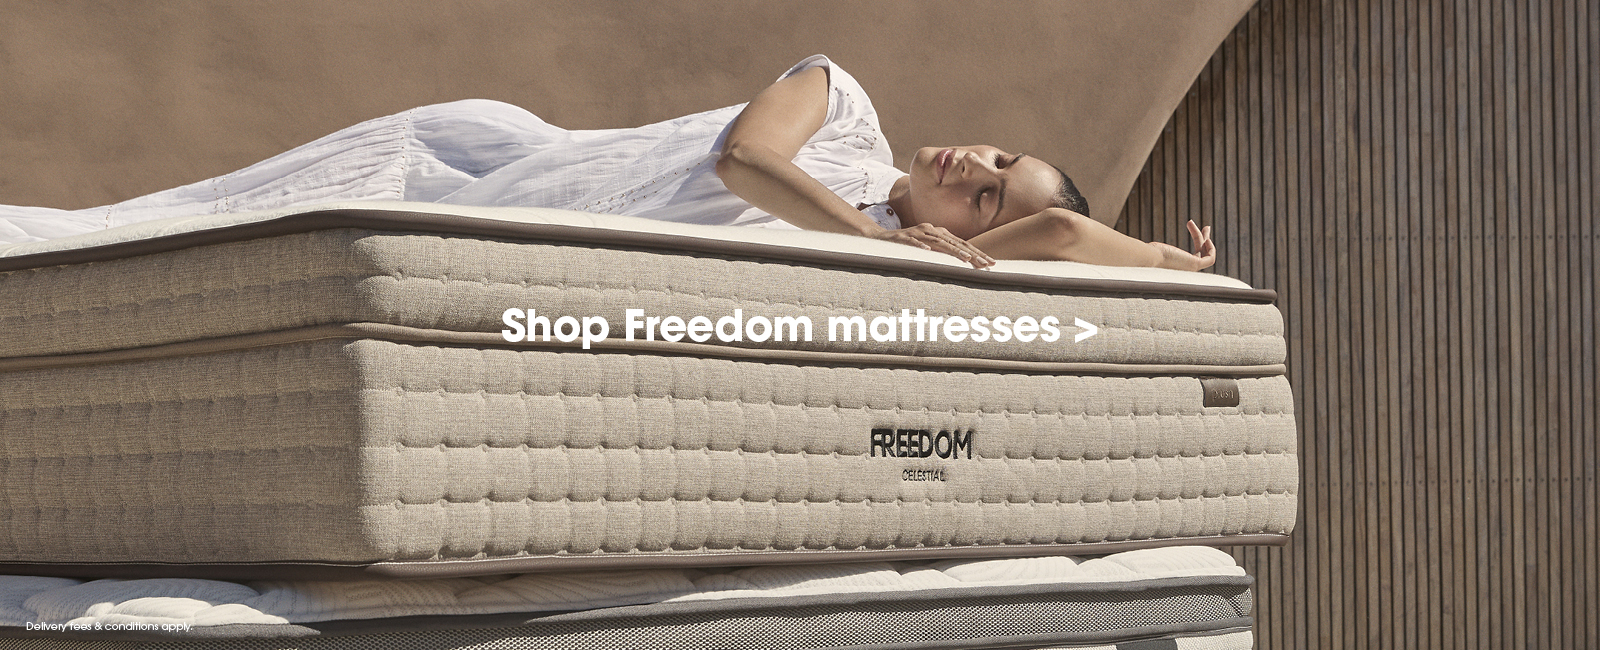 Freedom_mattress landing page_webassetsd.jpg